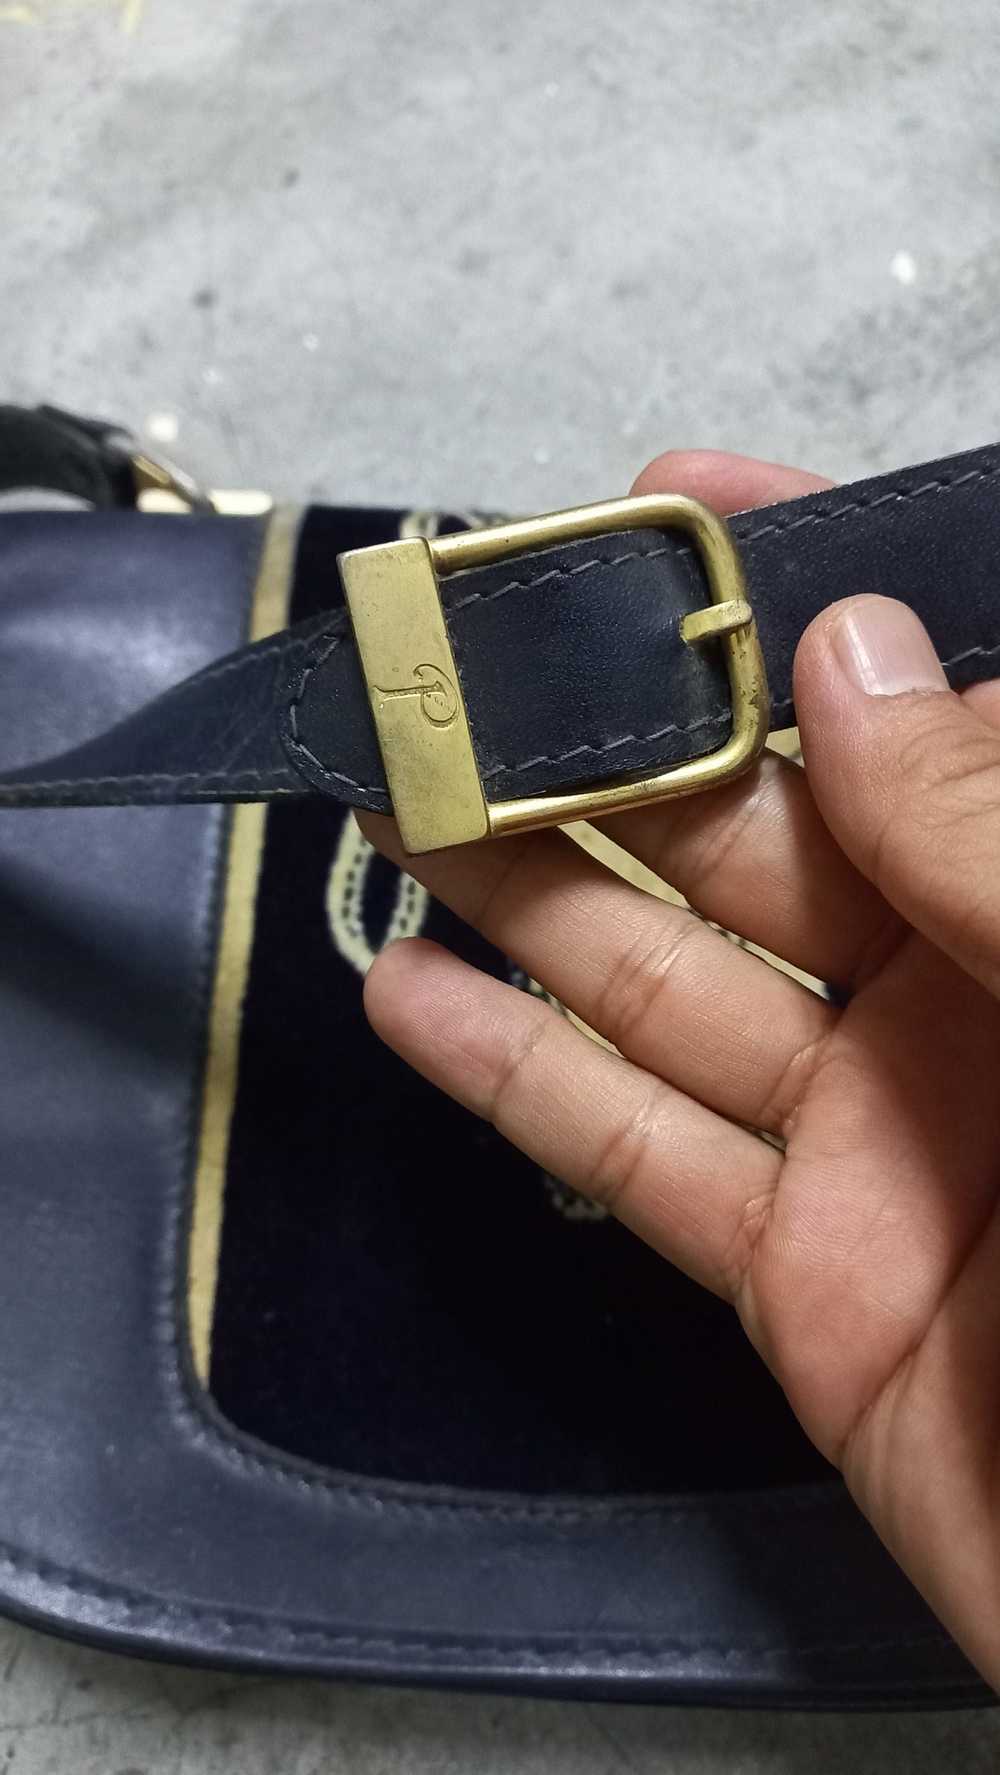 Principe Principe leather sling bag - image 2